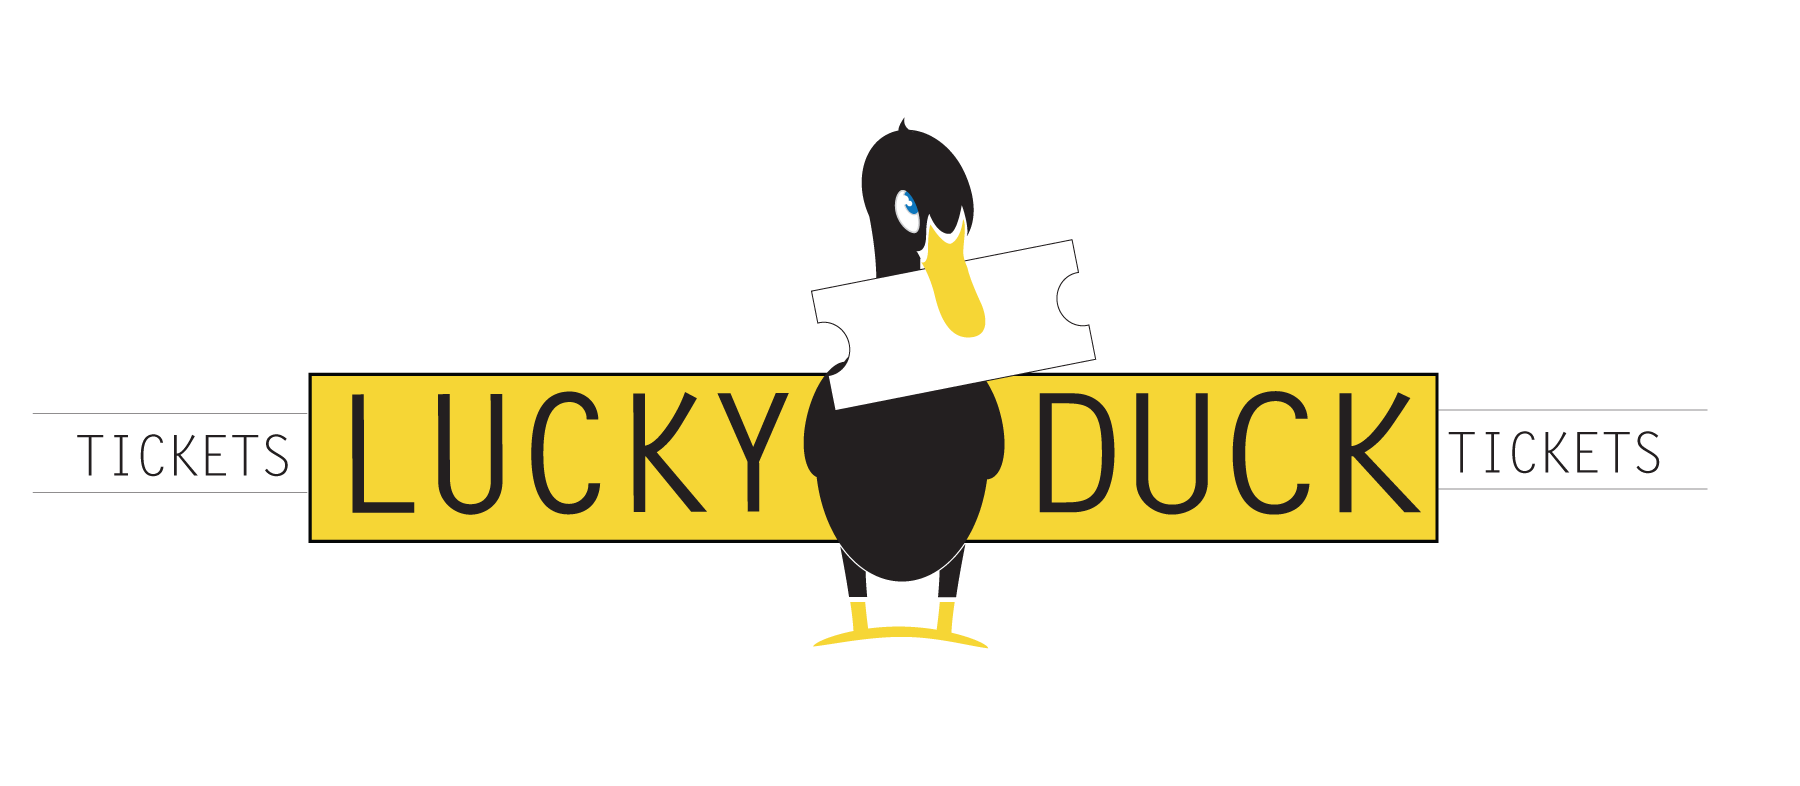 Yellow Ticket Logo - Lucky Duck Tickets logo. Portfolio. Graphic Design, Logos